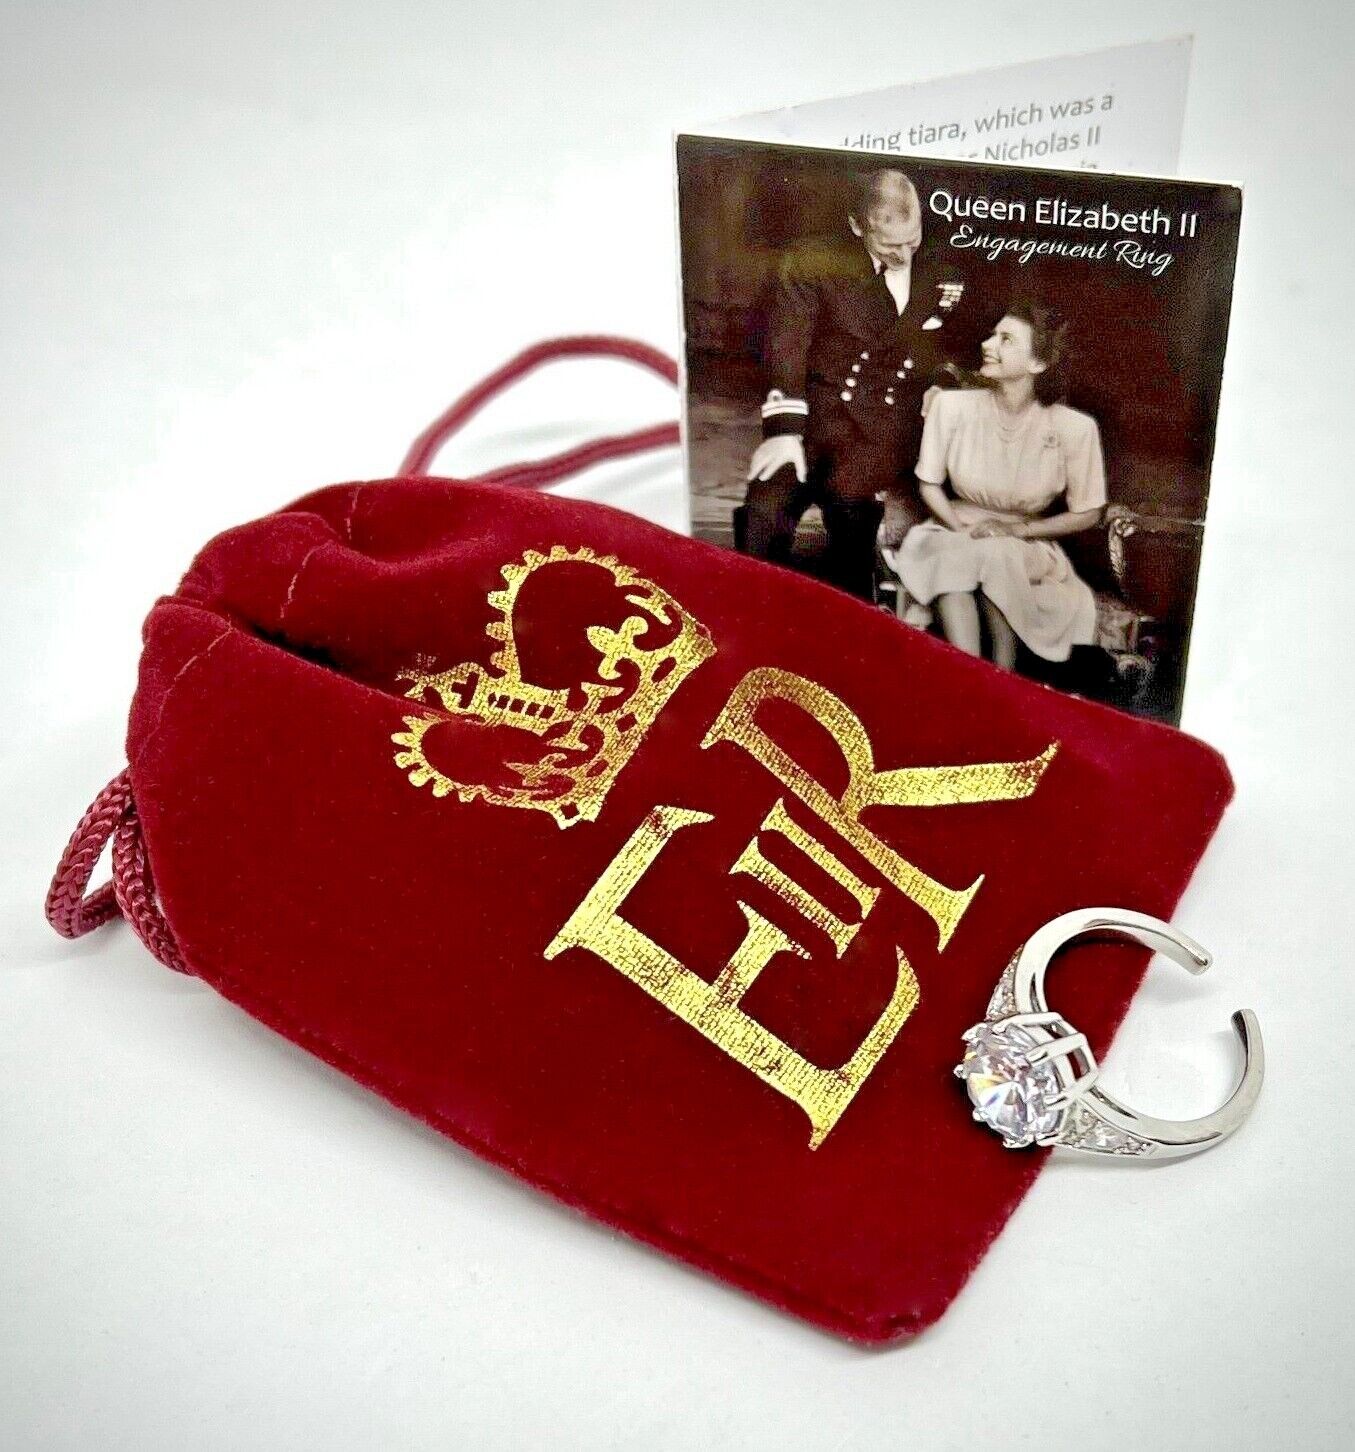 Queen Elizabeth Royal Engagement Ring Replica - Prince Philip Platinum Jubilee 